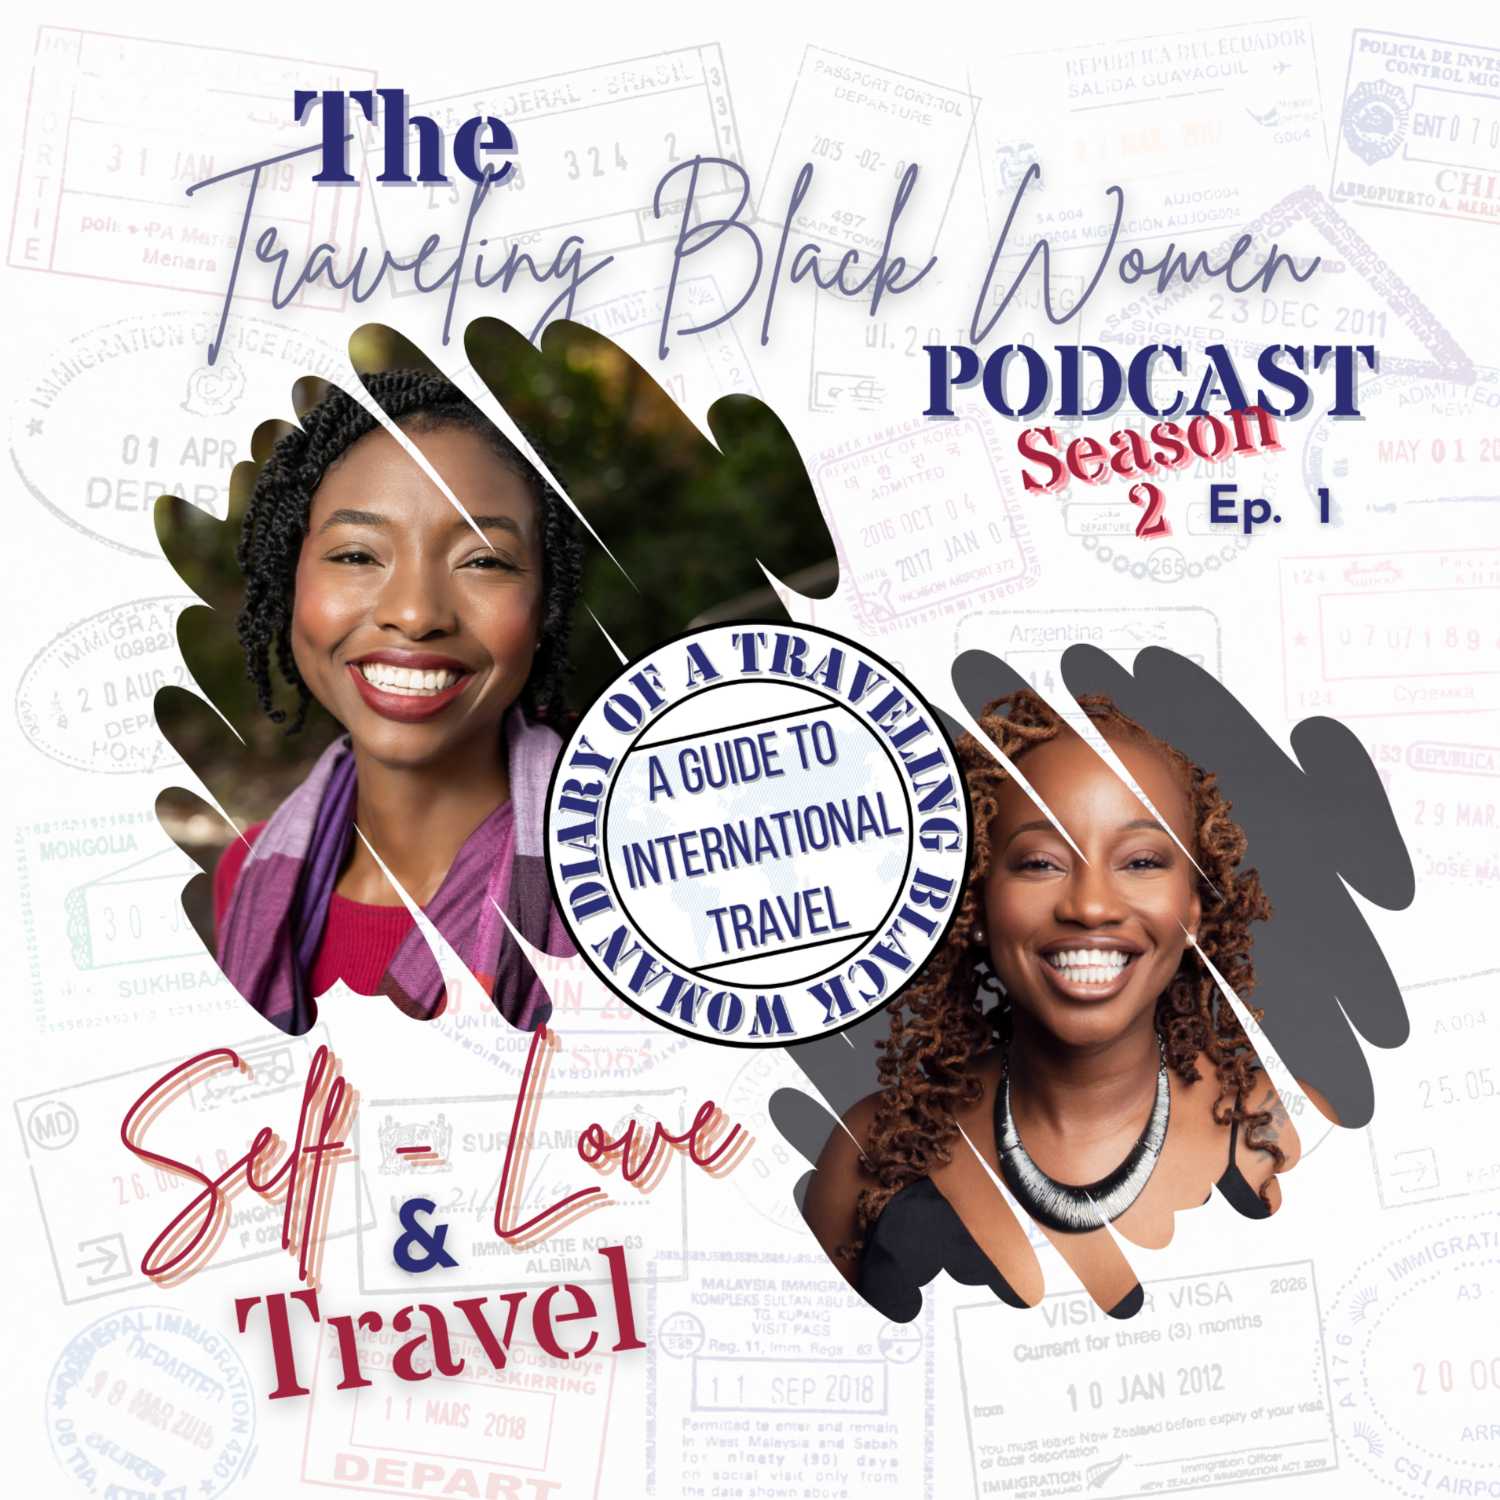 Episode 2.1: Self Love & Travel